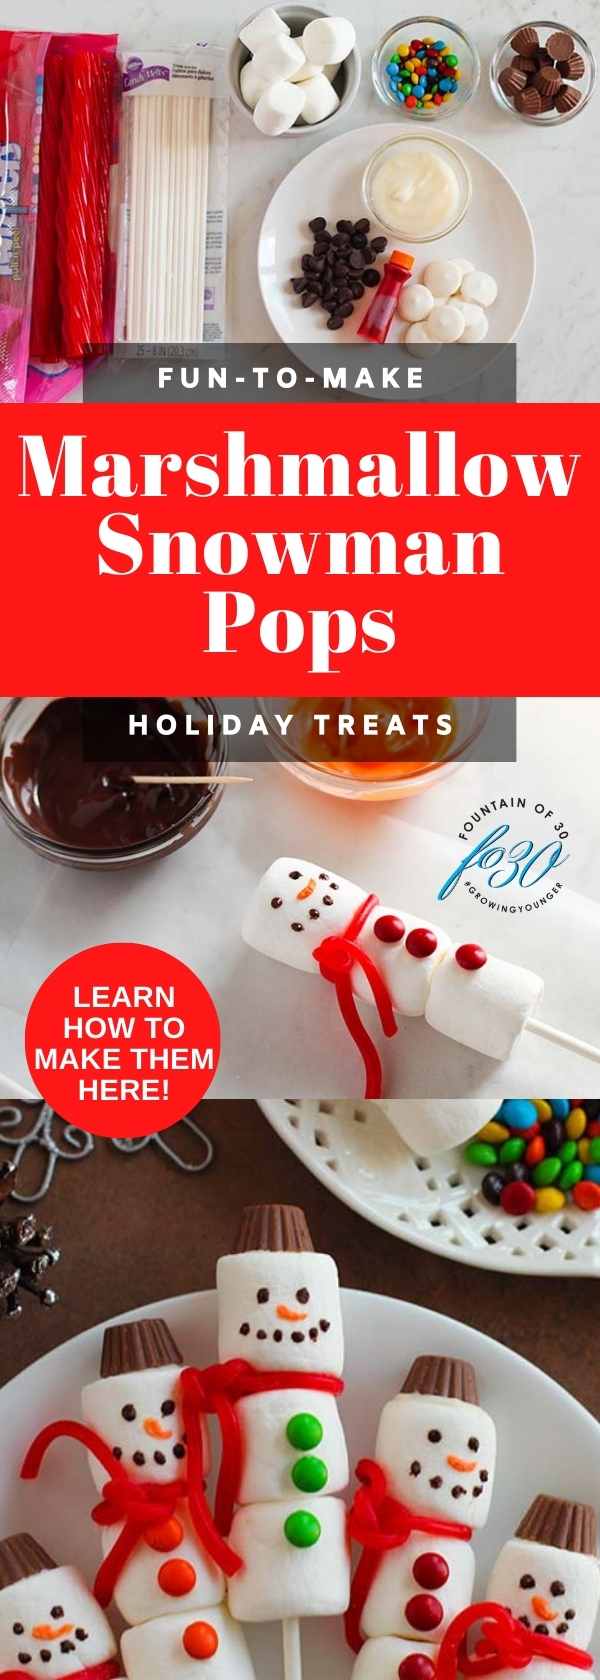 How To Make Marshmallow Snowmen fountainof30